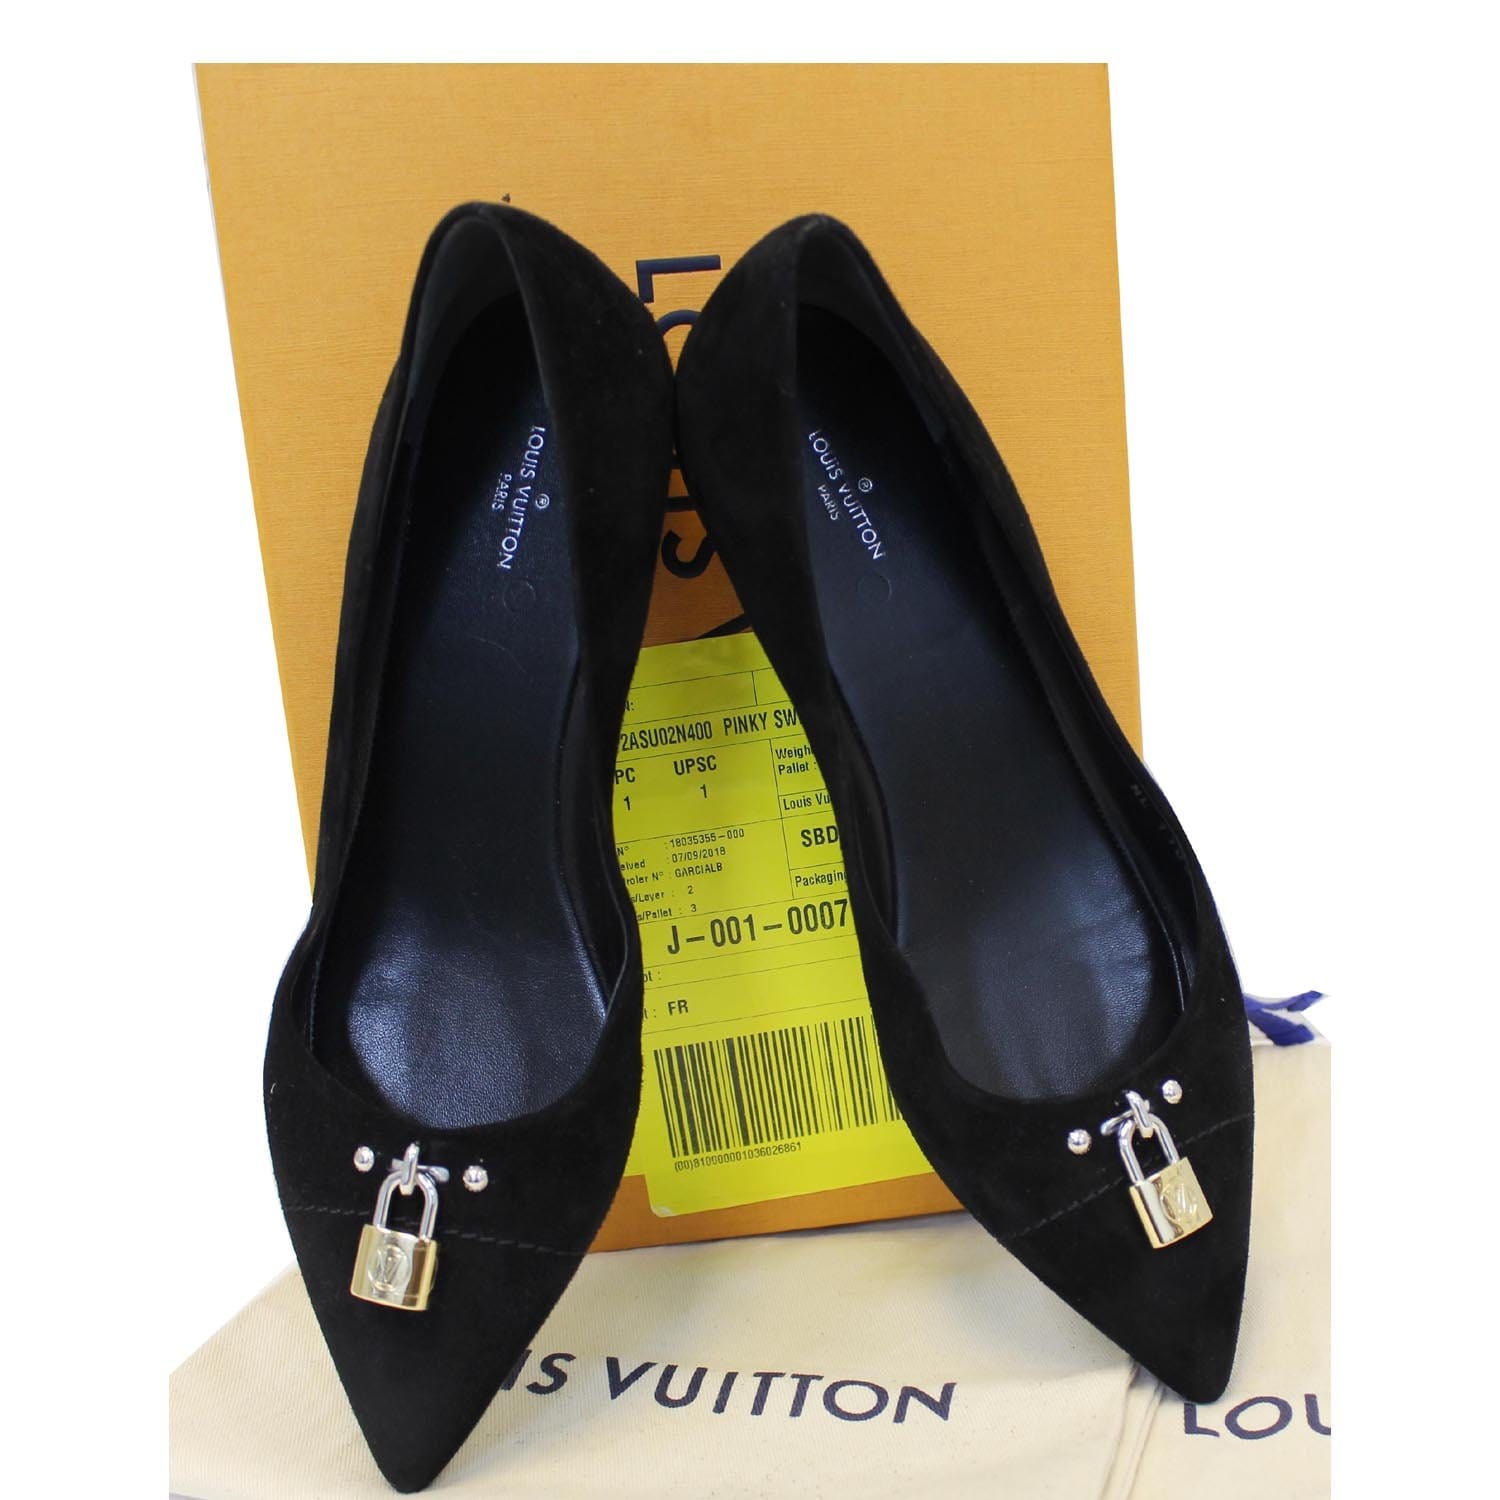 Shop Louis Vuitton Women's Flat Shoes